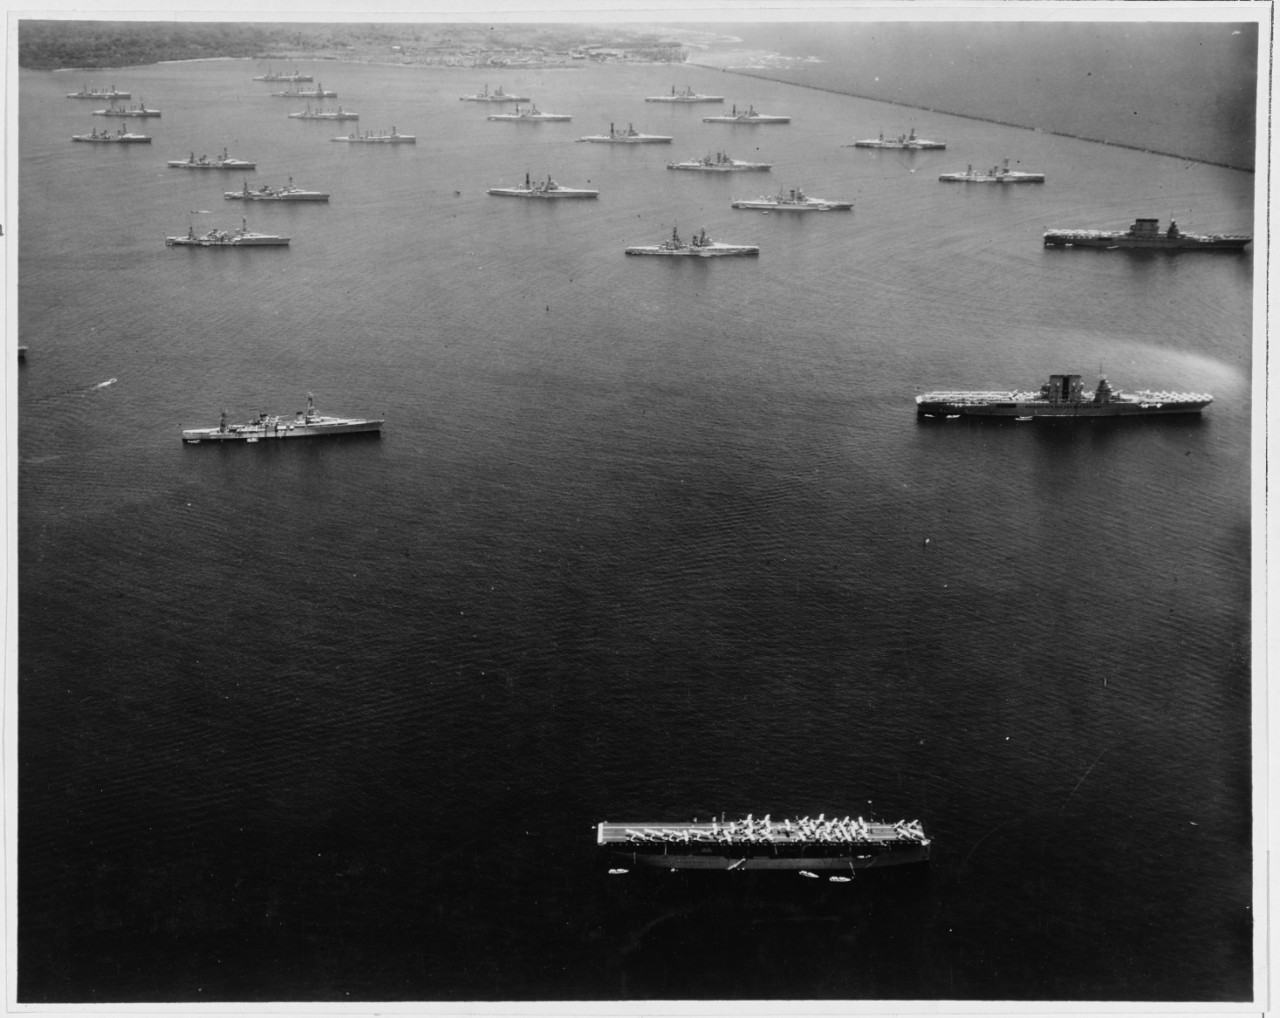 The U.S. Fleet at anchor off Colon